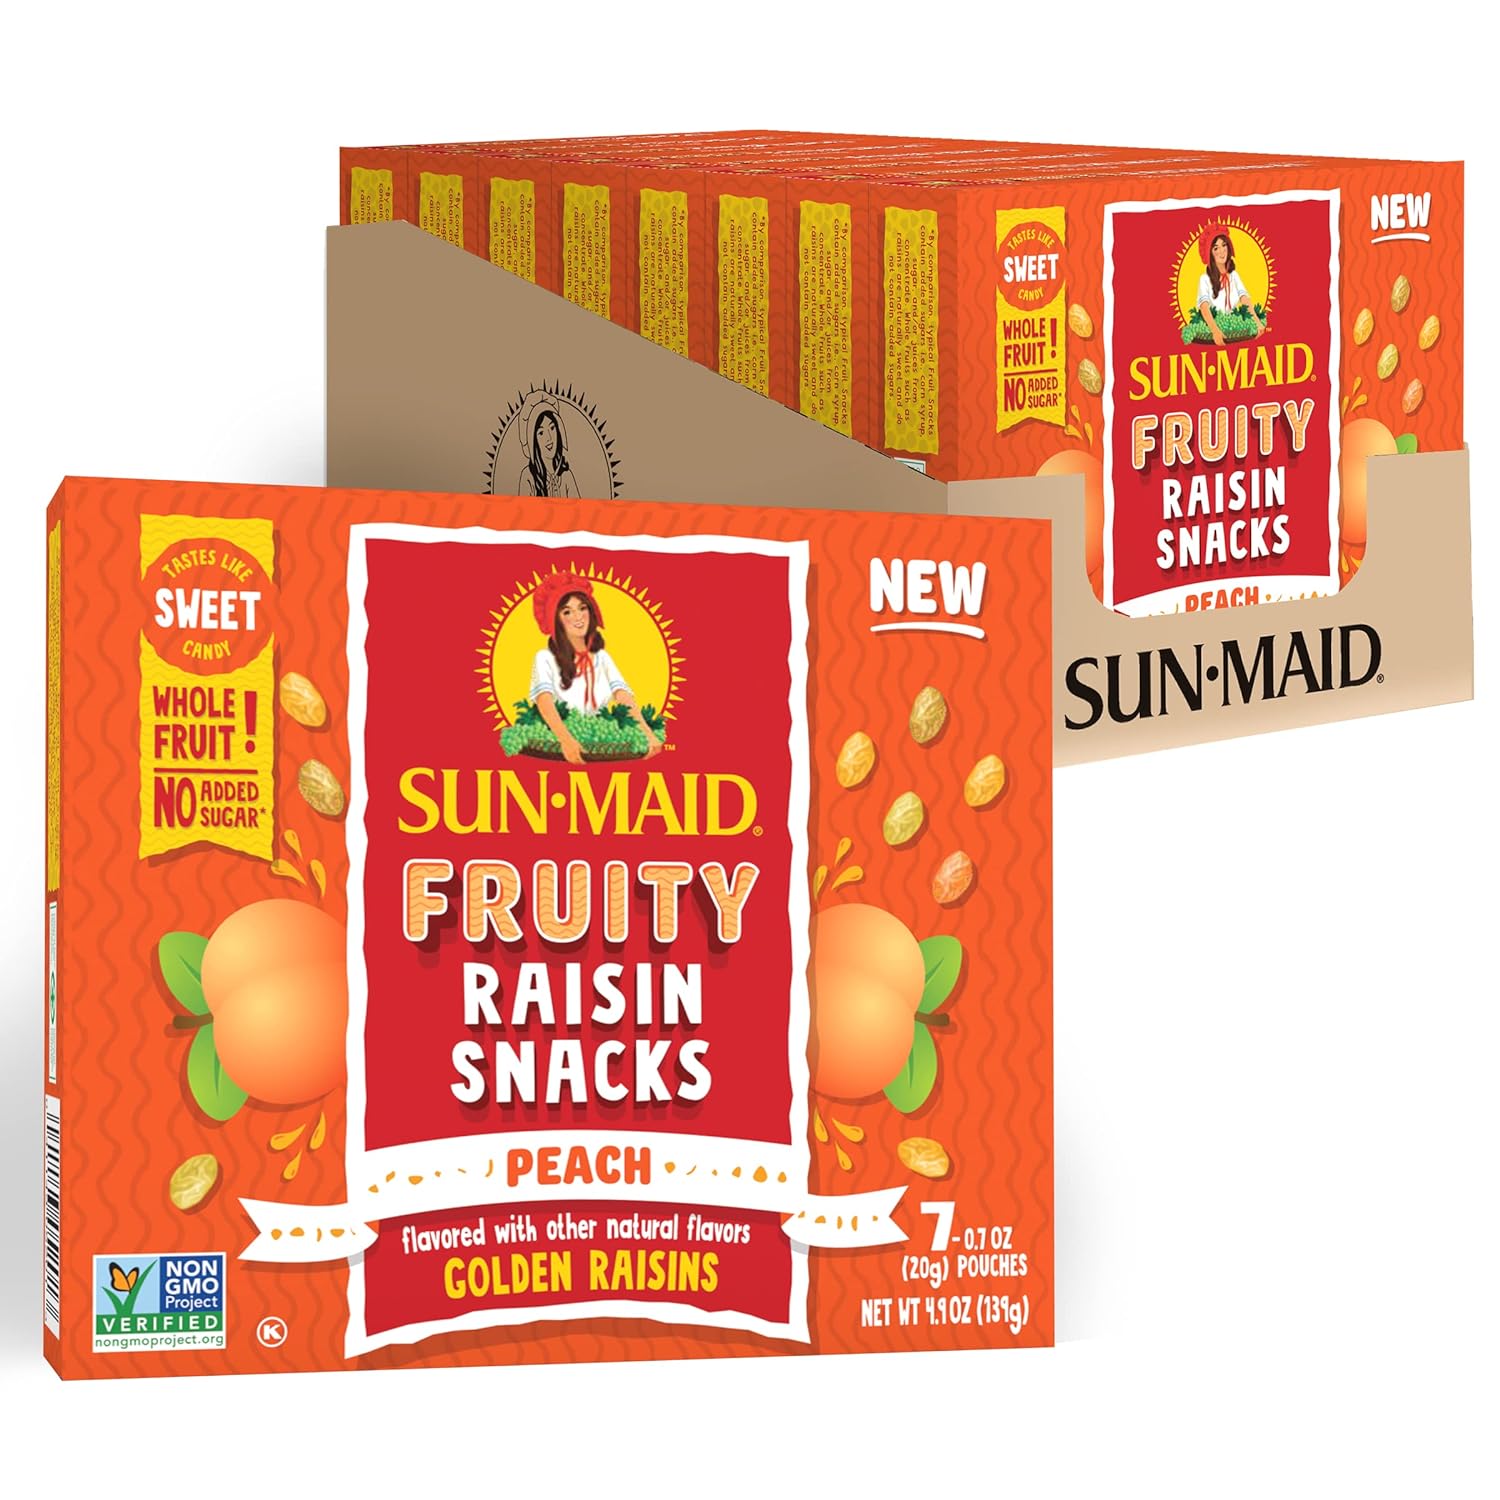 Sun-Maid Peach Fruity Raisin Snacks - (56 Pack) 0.7 oz Pouches - Peach Raisins - Dried Fruit Snack for Lunches and Snacks